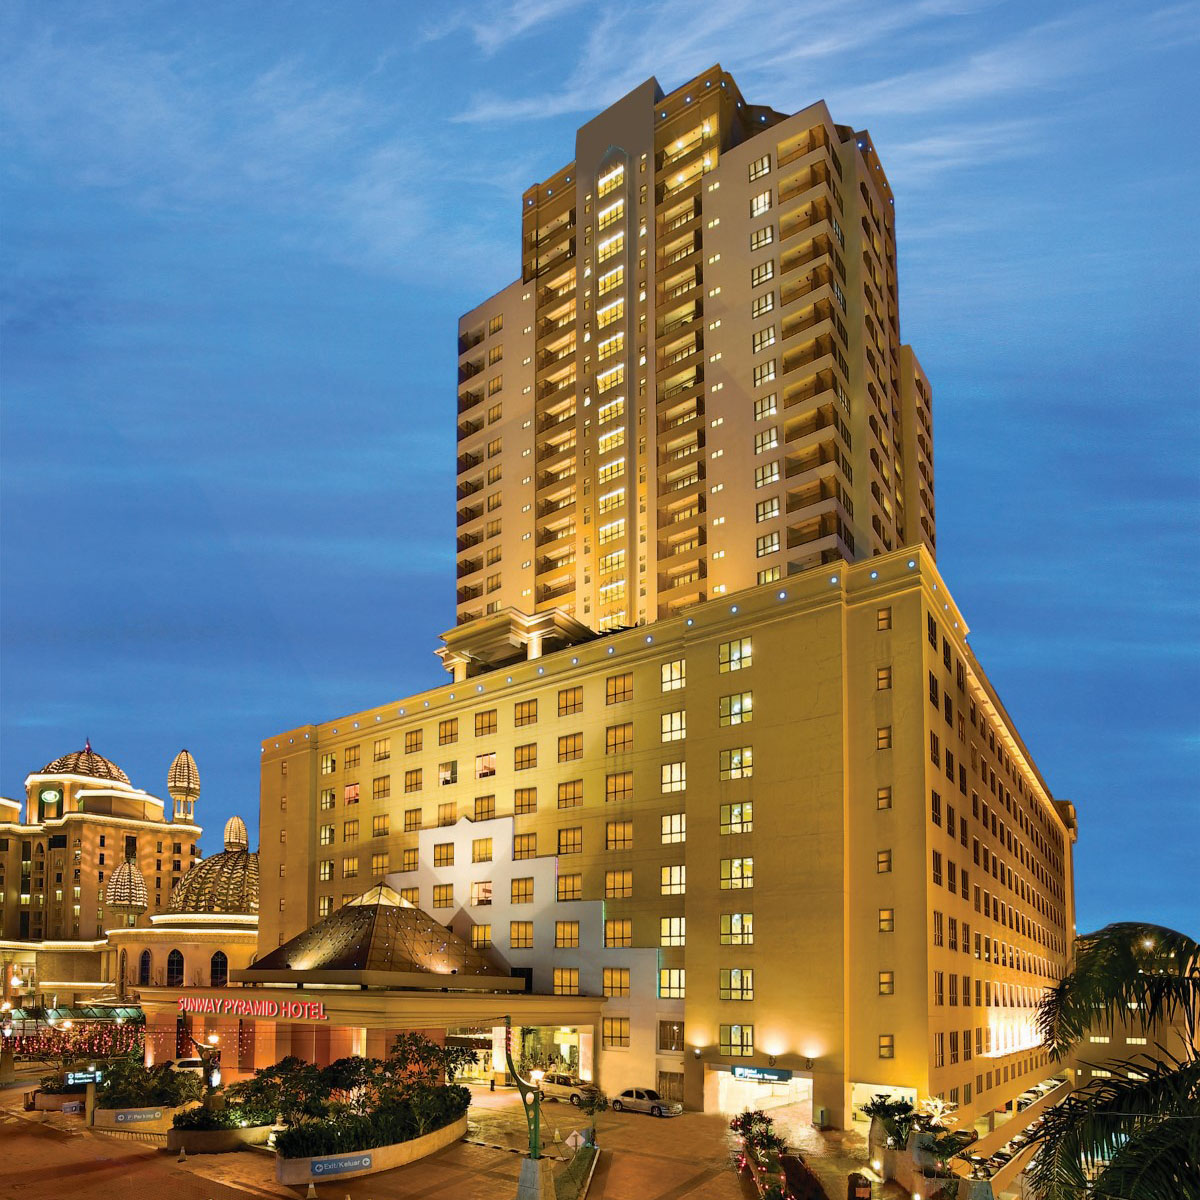 Façade of Suway Pyramid Hotel amid the dusky blue sky, with lights adorning the building.